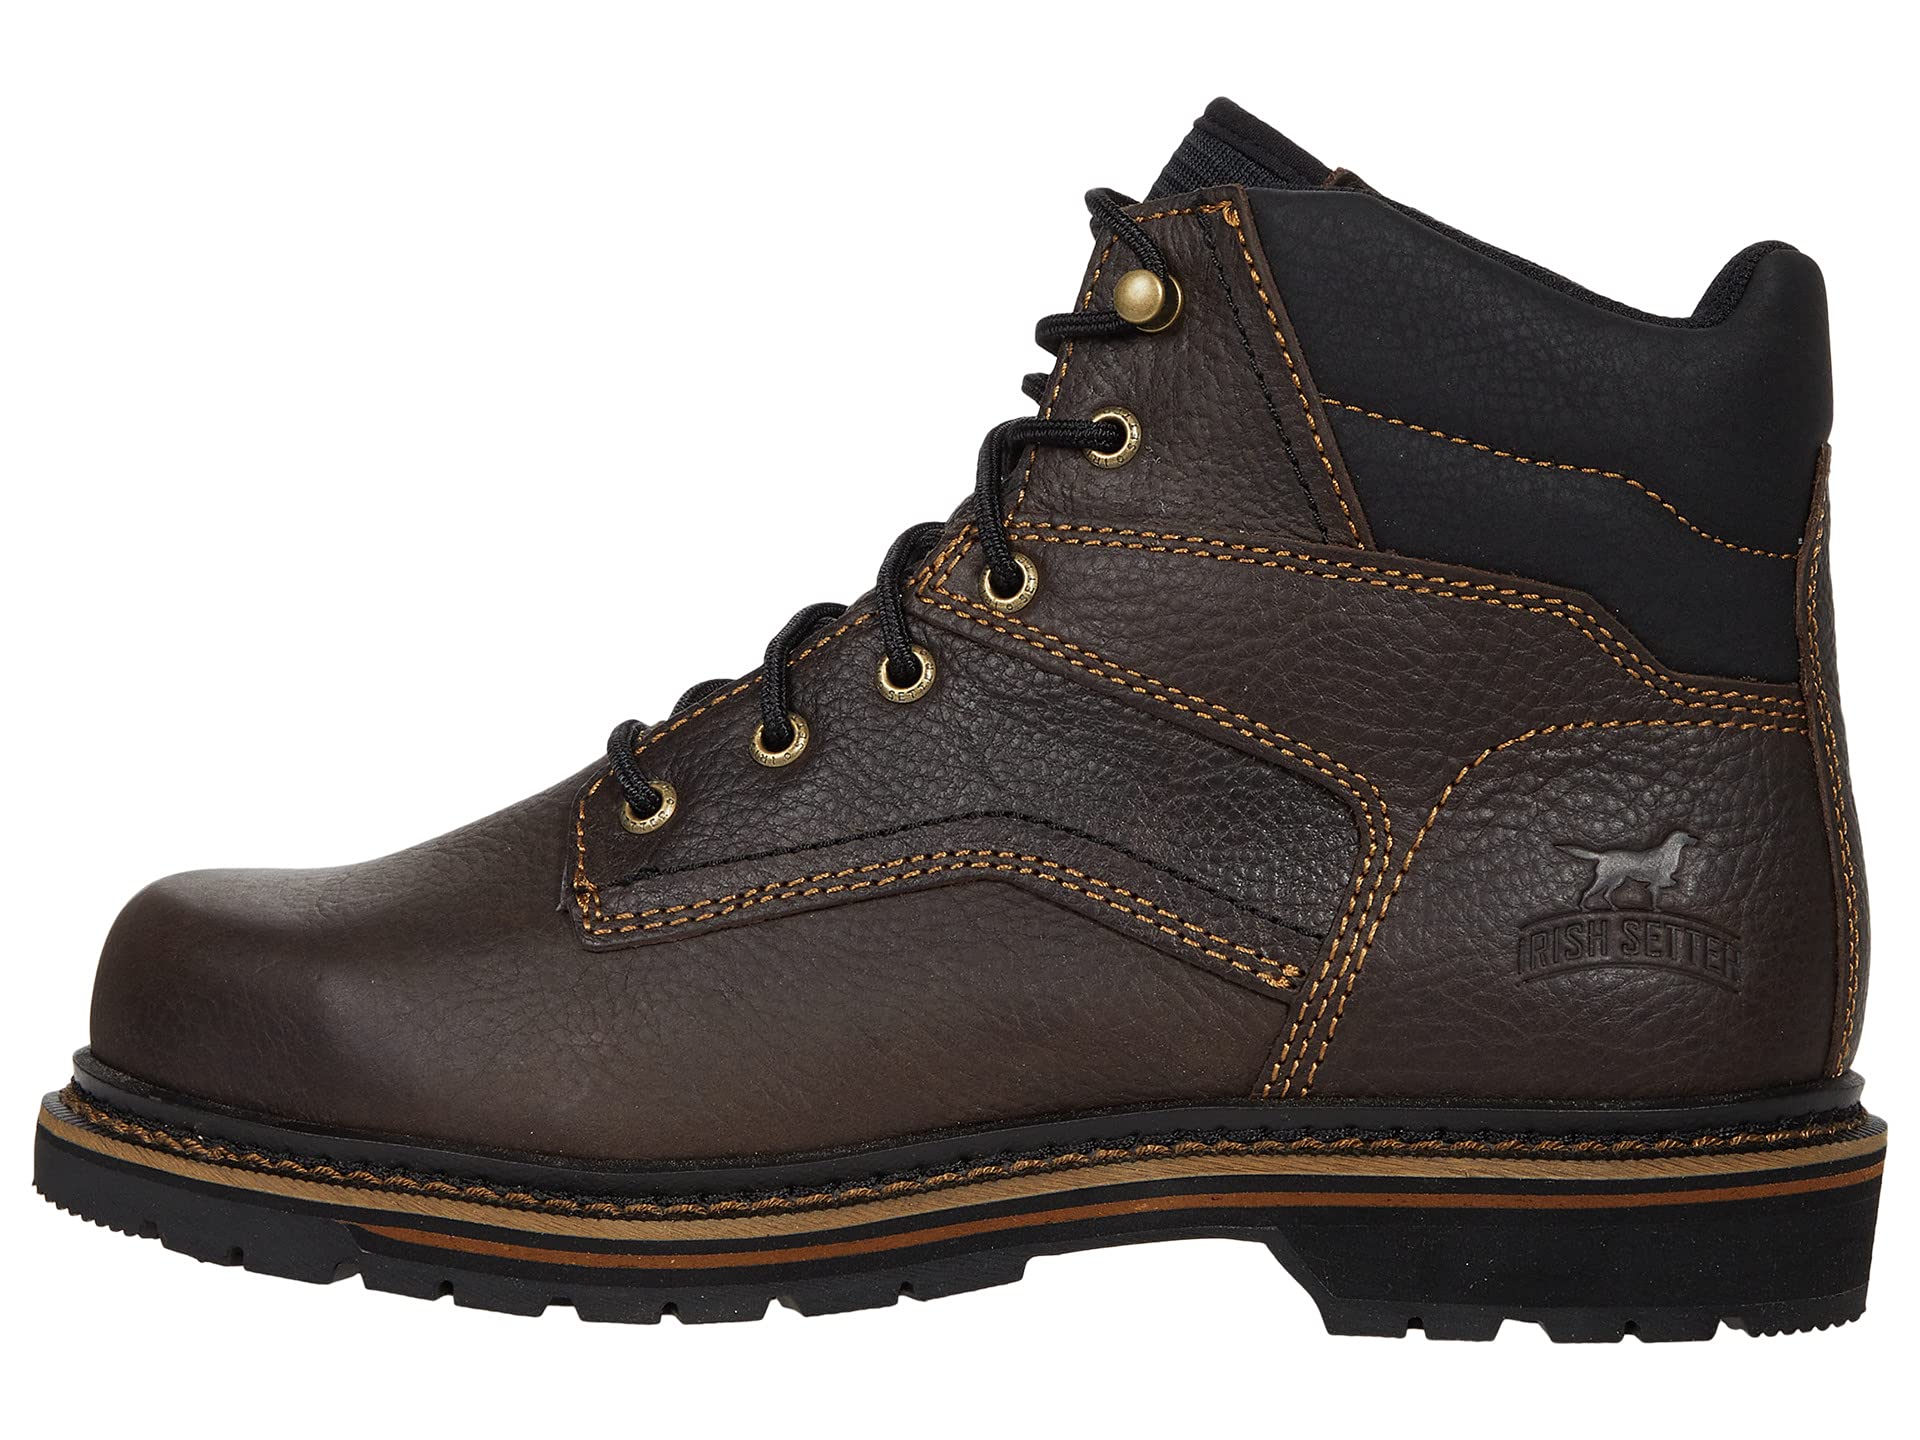 Ботинки Irish Setter Kittson 6 Steel-Toe Leather Work Boot EH, коричневый